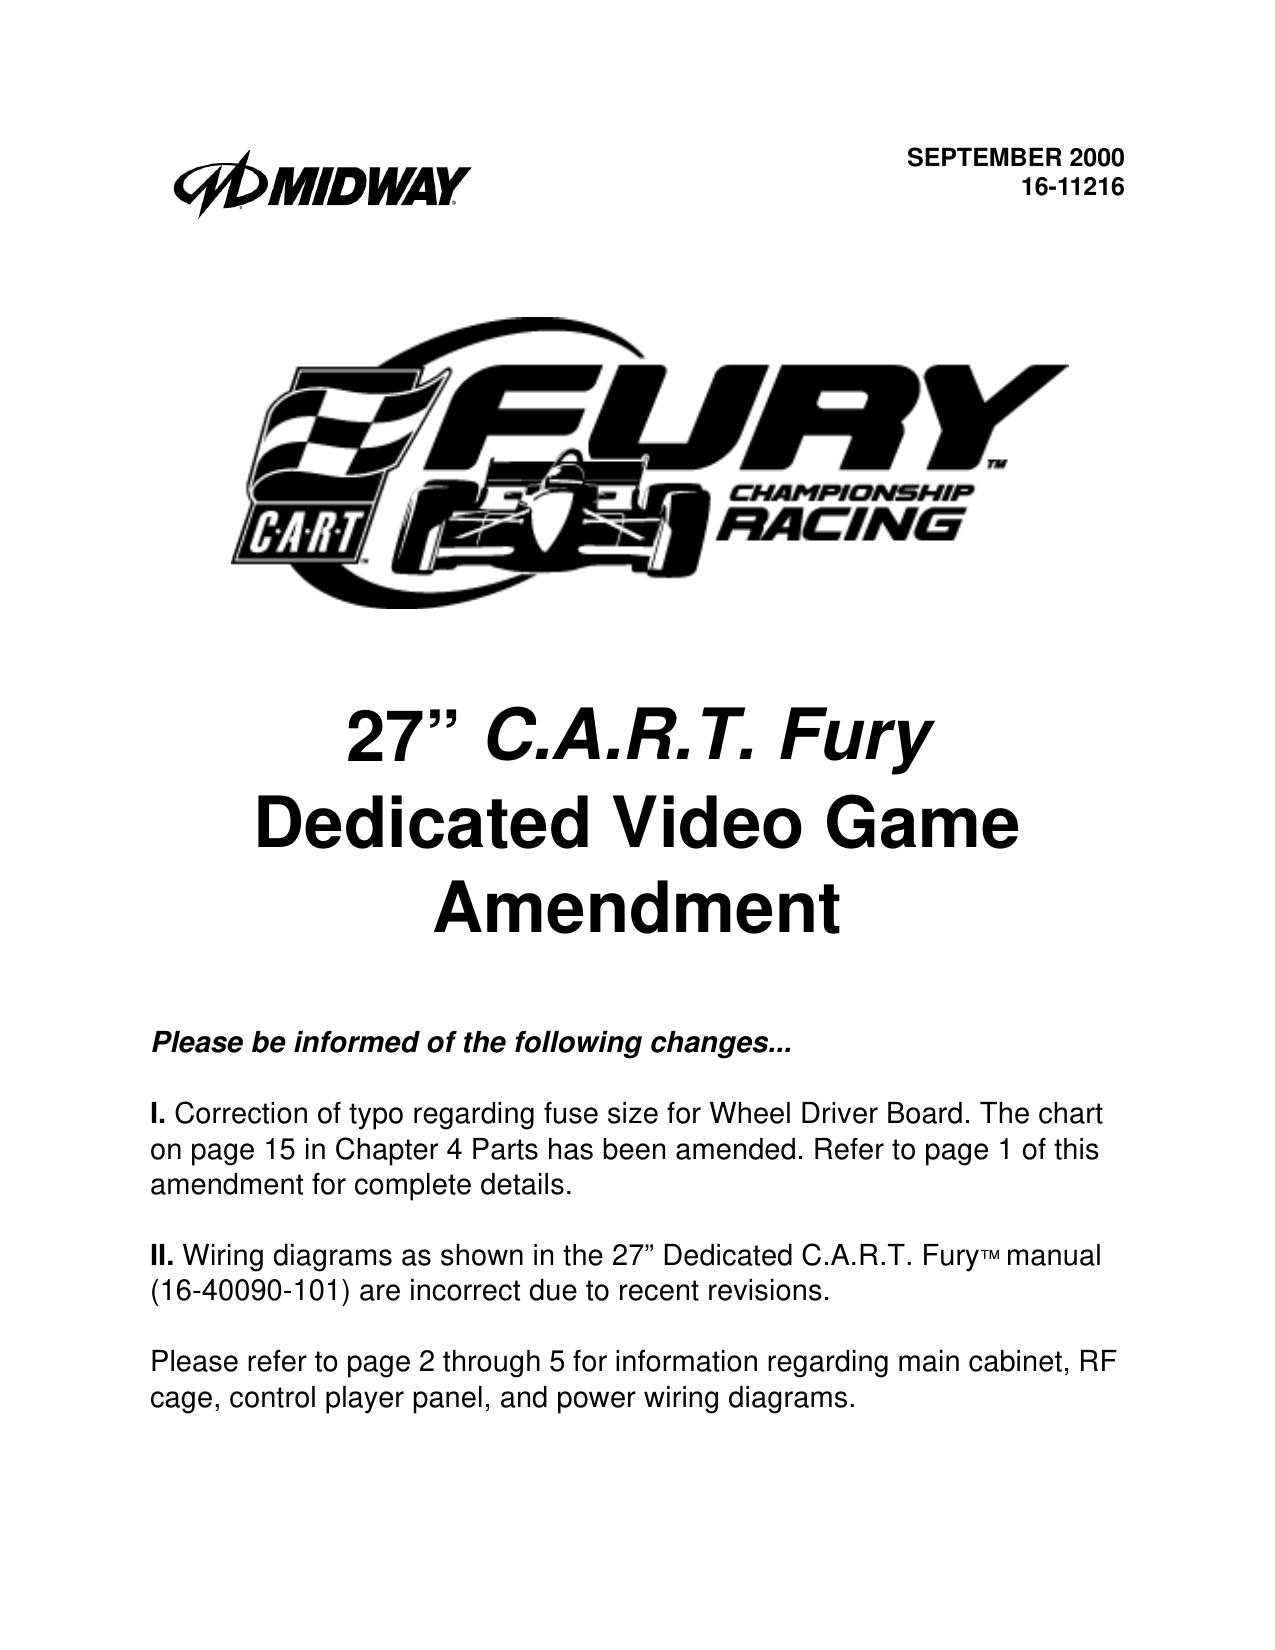 Cart Fury Dedicated 27in Amendment